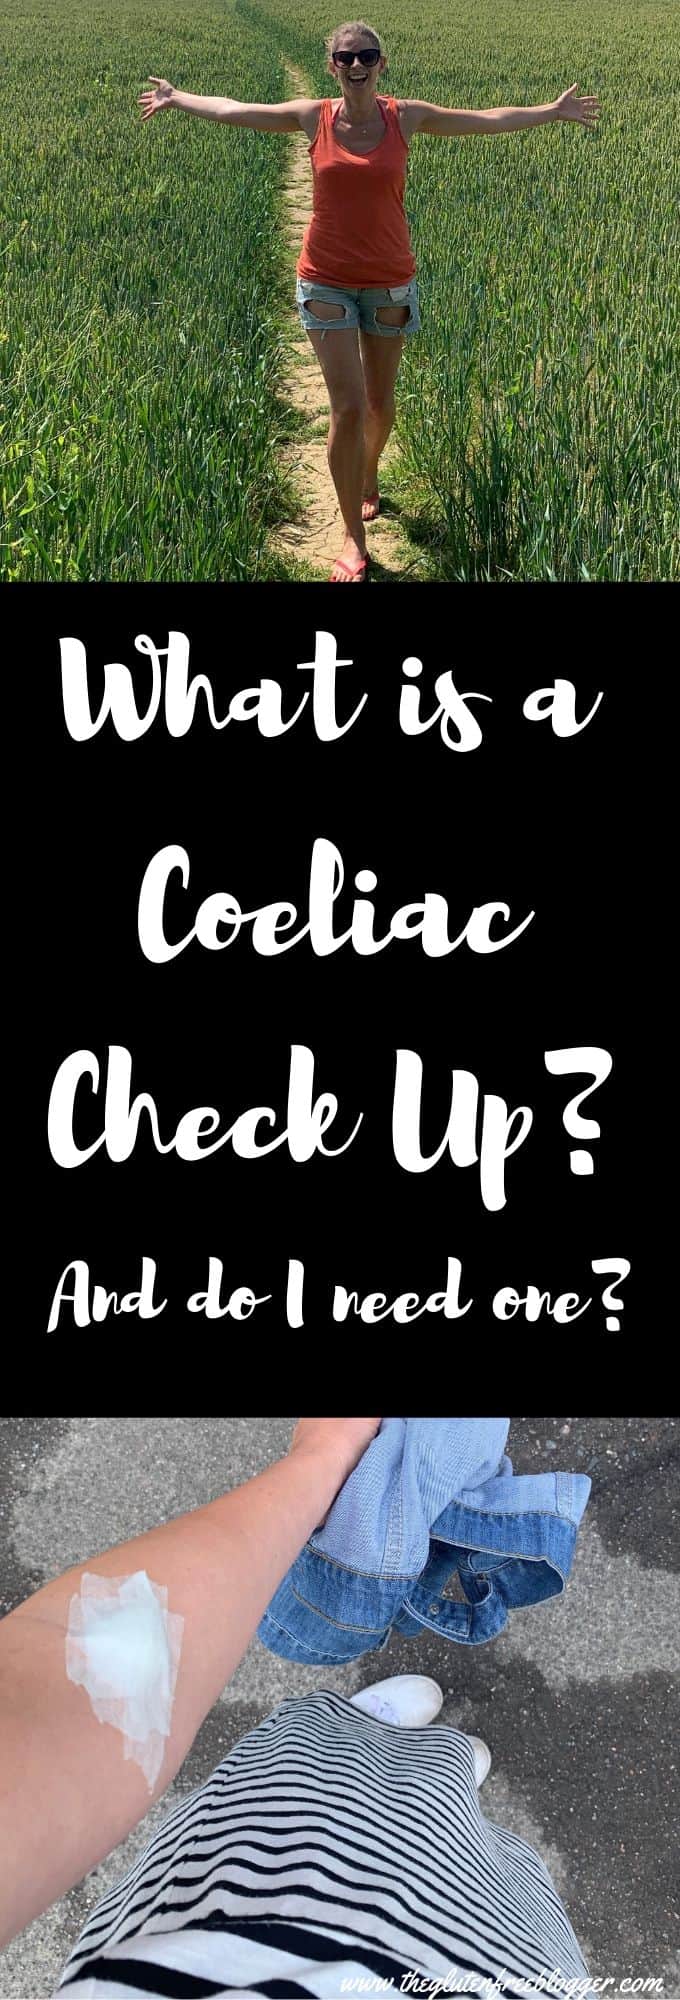 coeliac check up - annual coeliac check up celiac life tips living gluten free diet